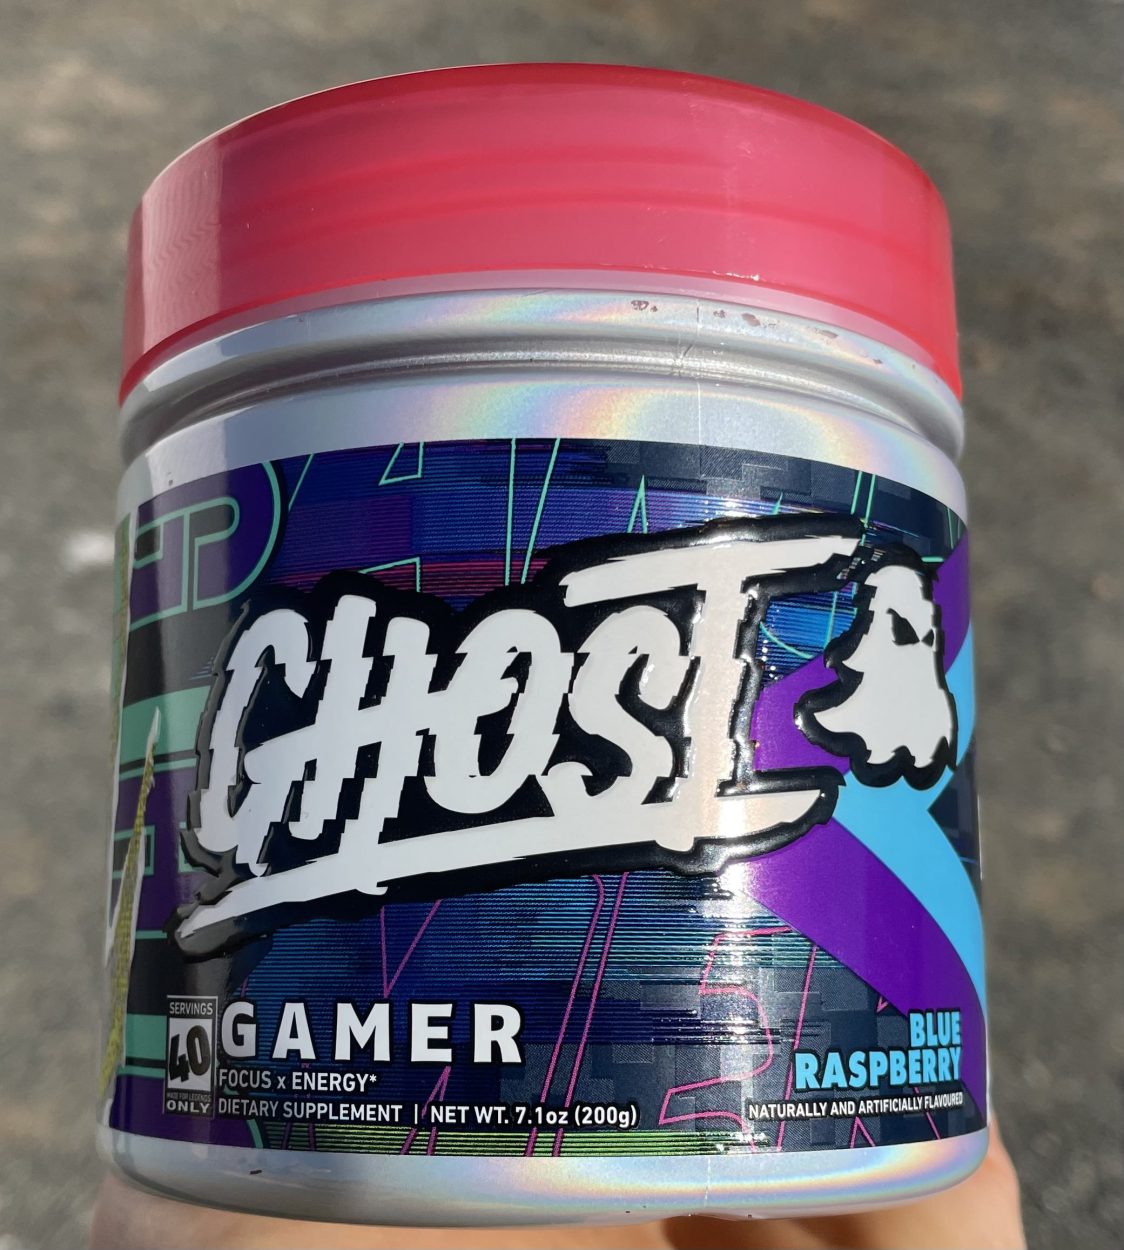 A tub of Ghost Gamer energy drink blue raspberry flavor.